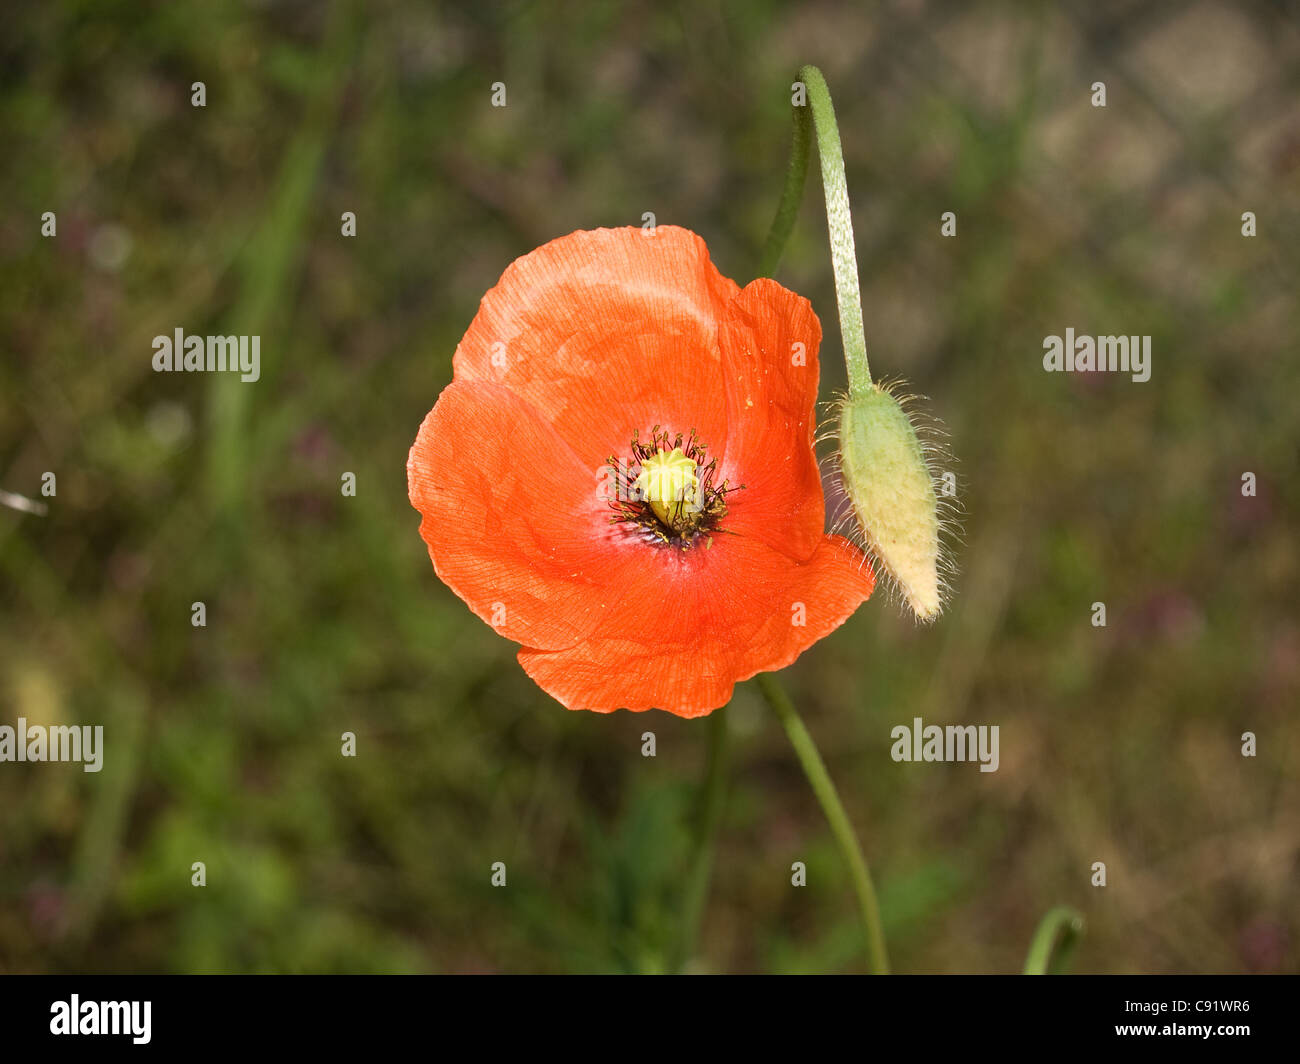 Corn poppy, Papaver rhoeas, horizontal portrait of flower blooming in garden. Stock Photo